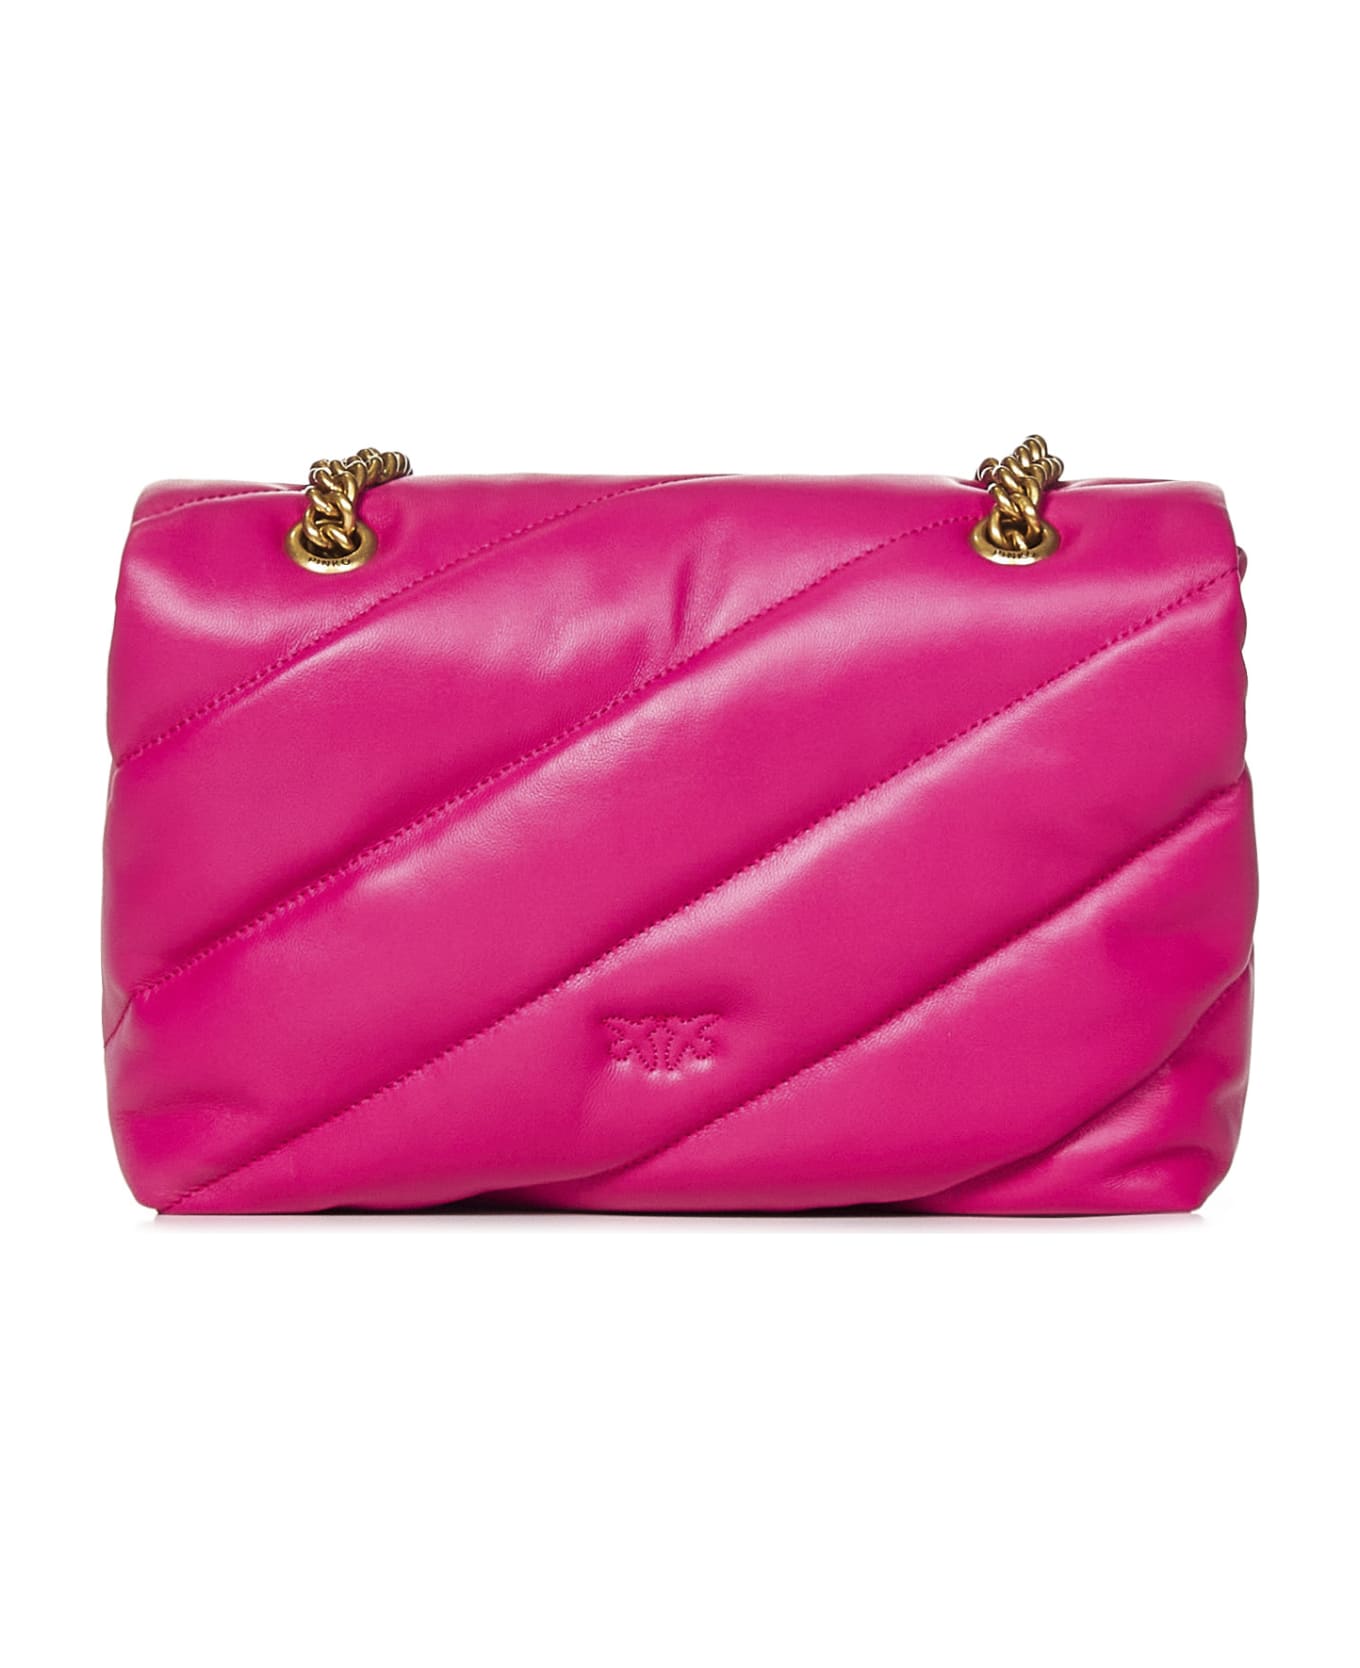 Pinko Classic Love Bag Puff Maxi Quilt Shoulder Bag - Fuchsia